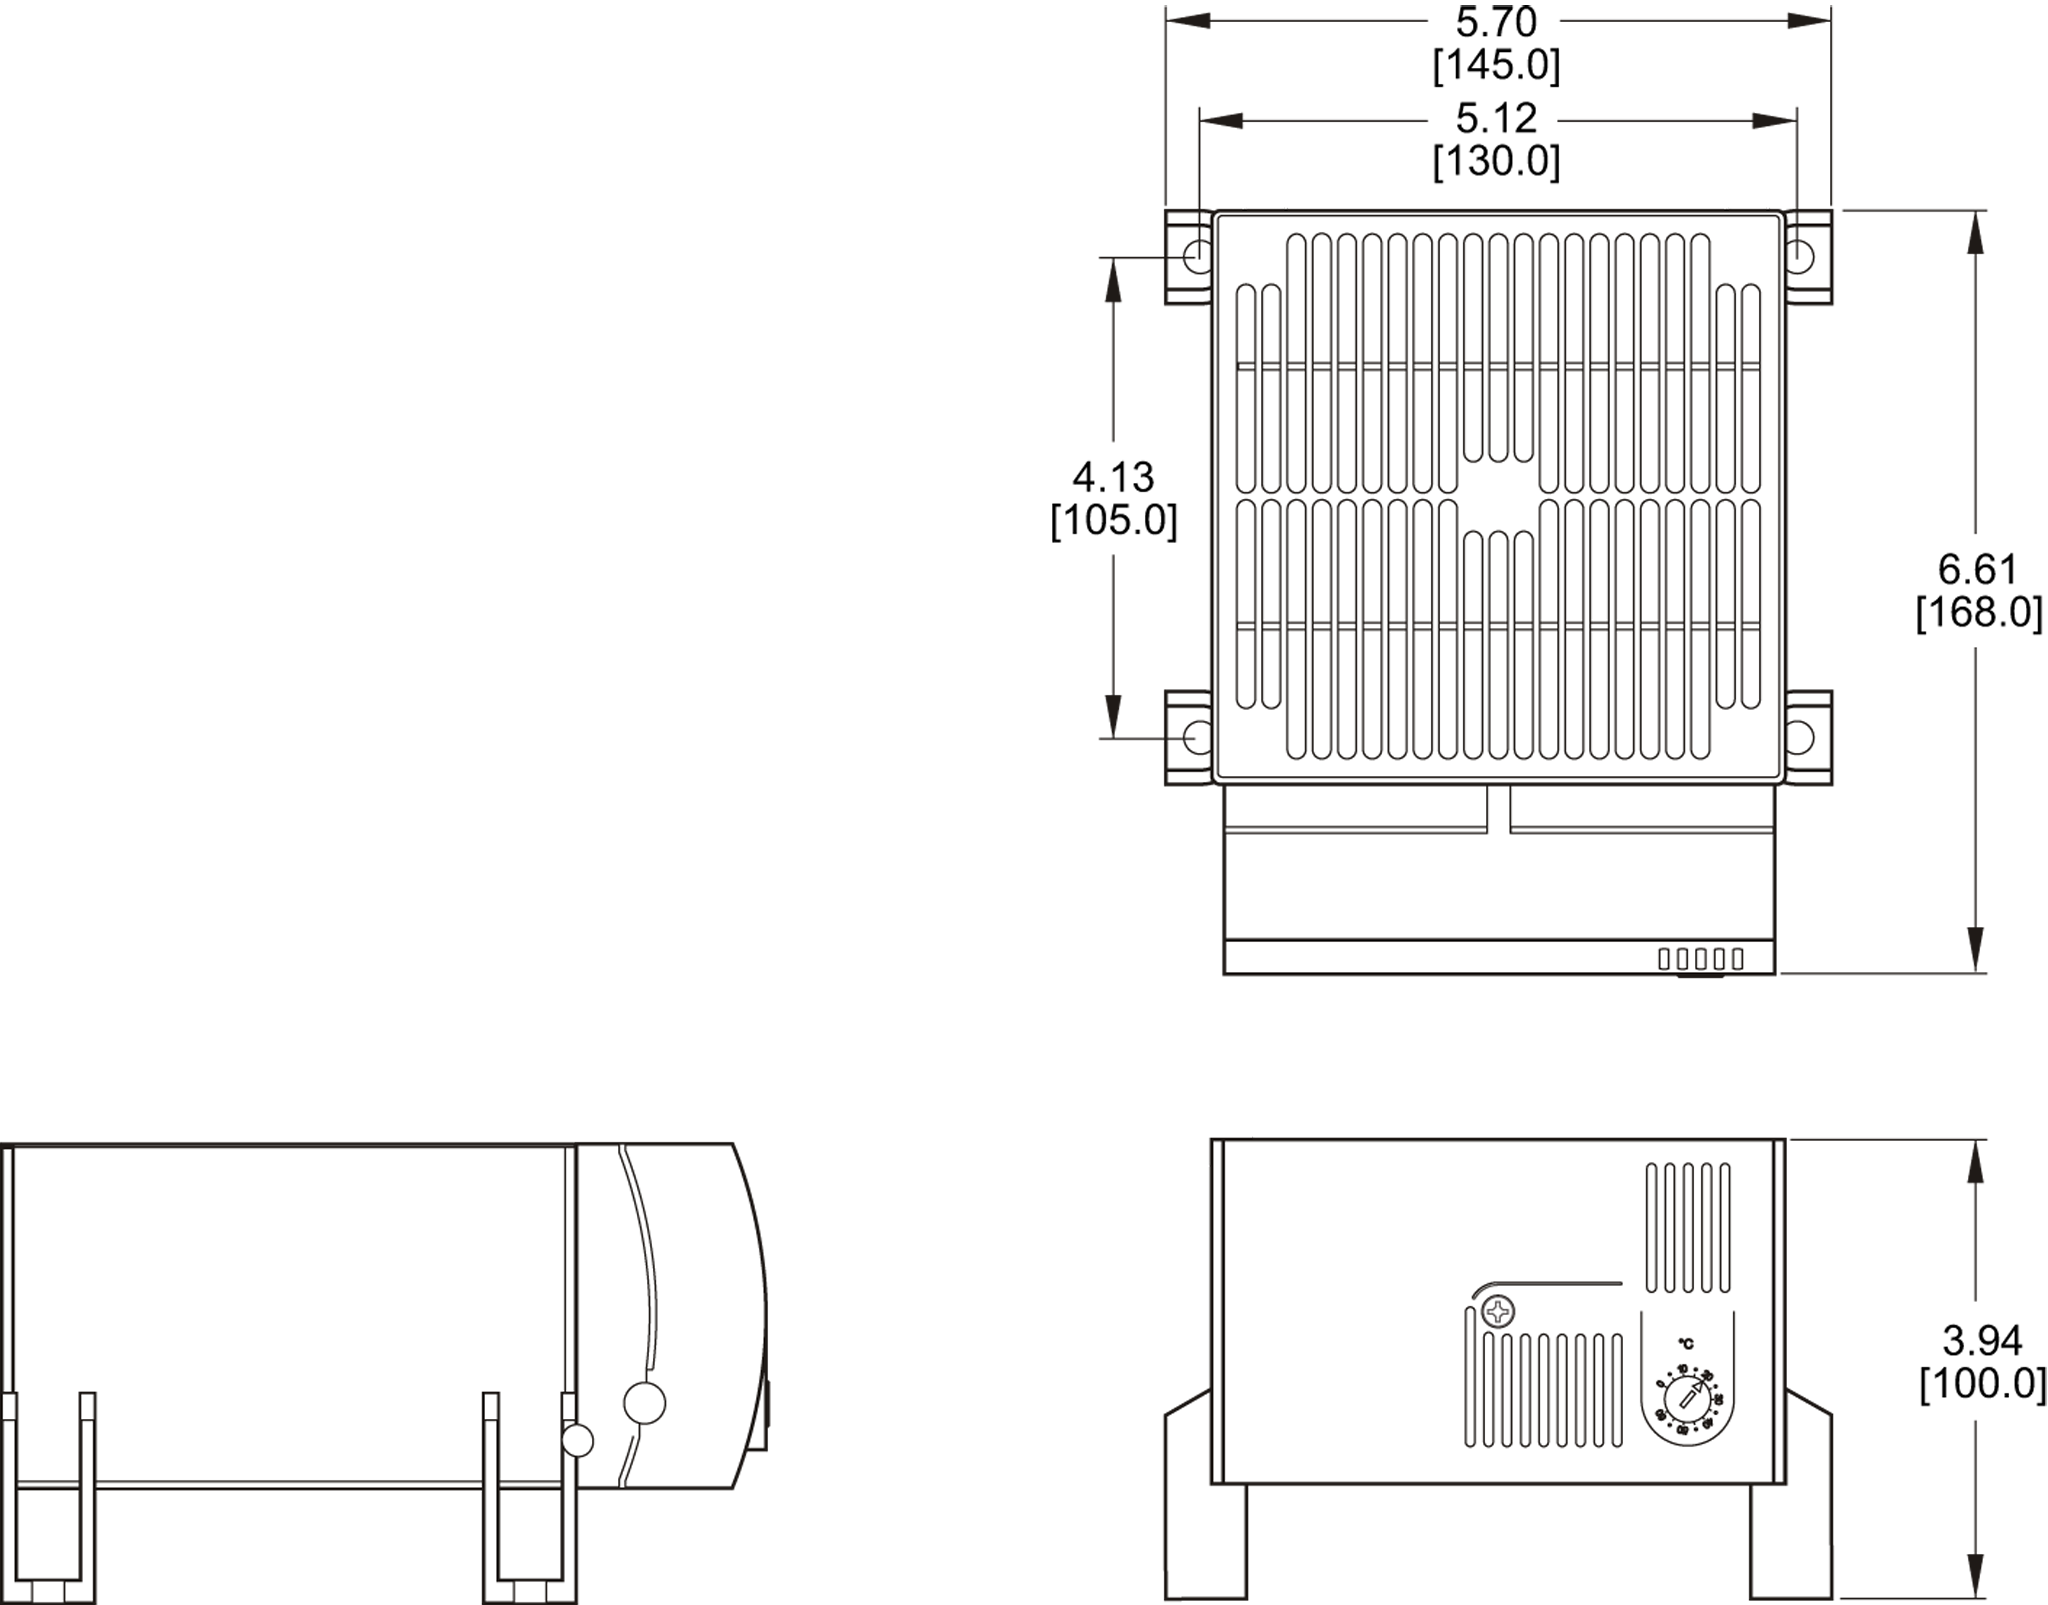 Foot-Mounted Heater General Arrangement Drawing